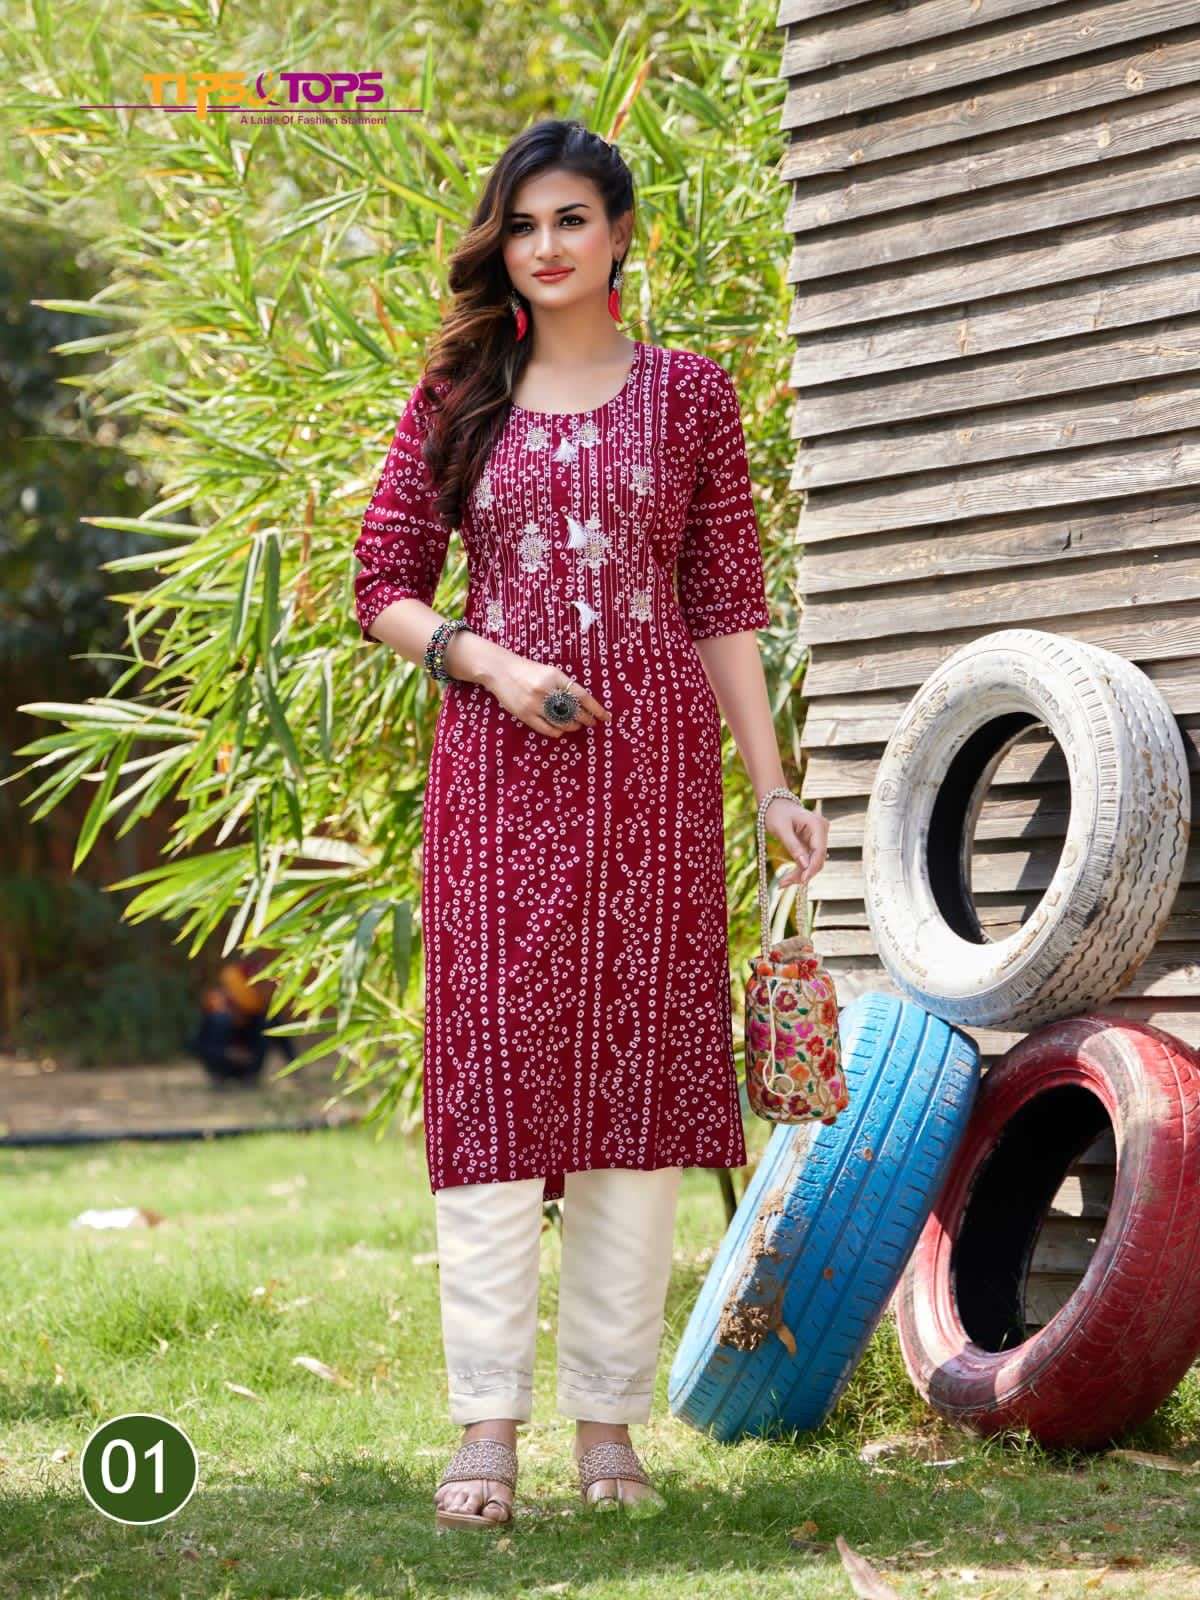 tips&tops bandhej vol 2 fancy designer kurti catalogue manufacturer surat